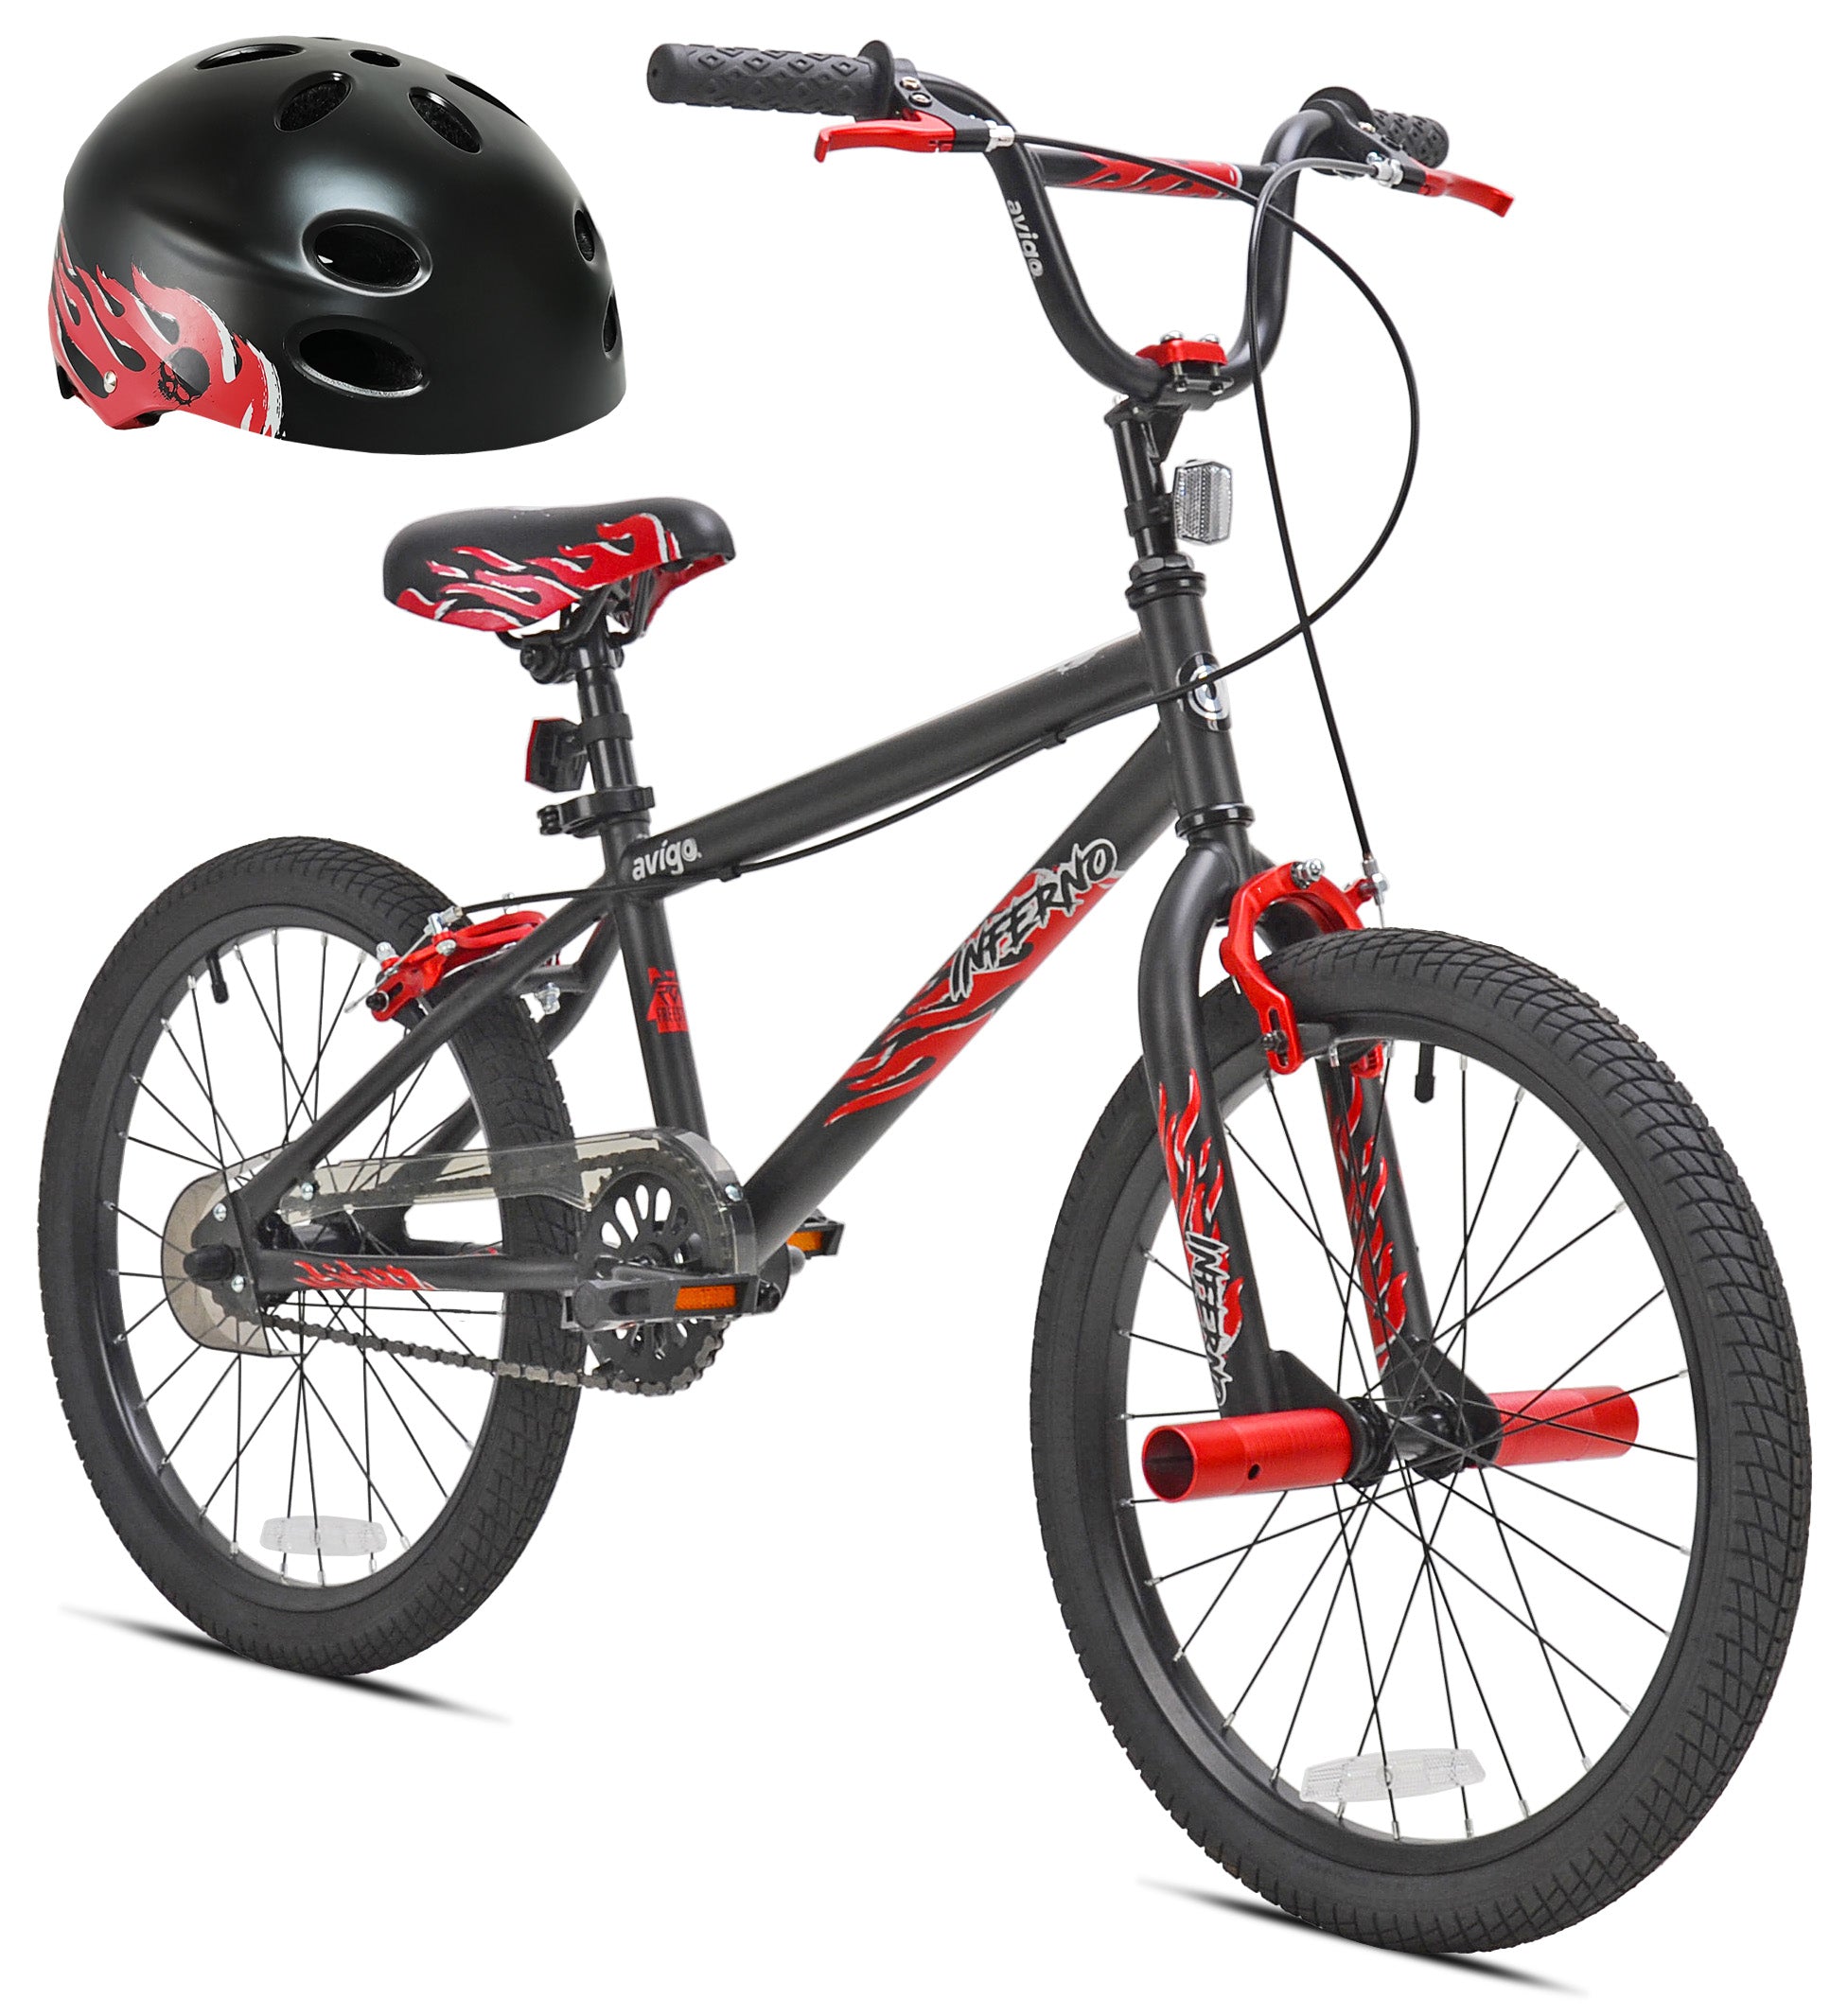 20" Avigo Inferno Bike with Helmet